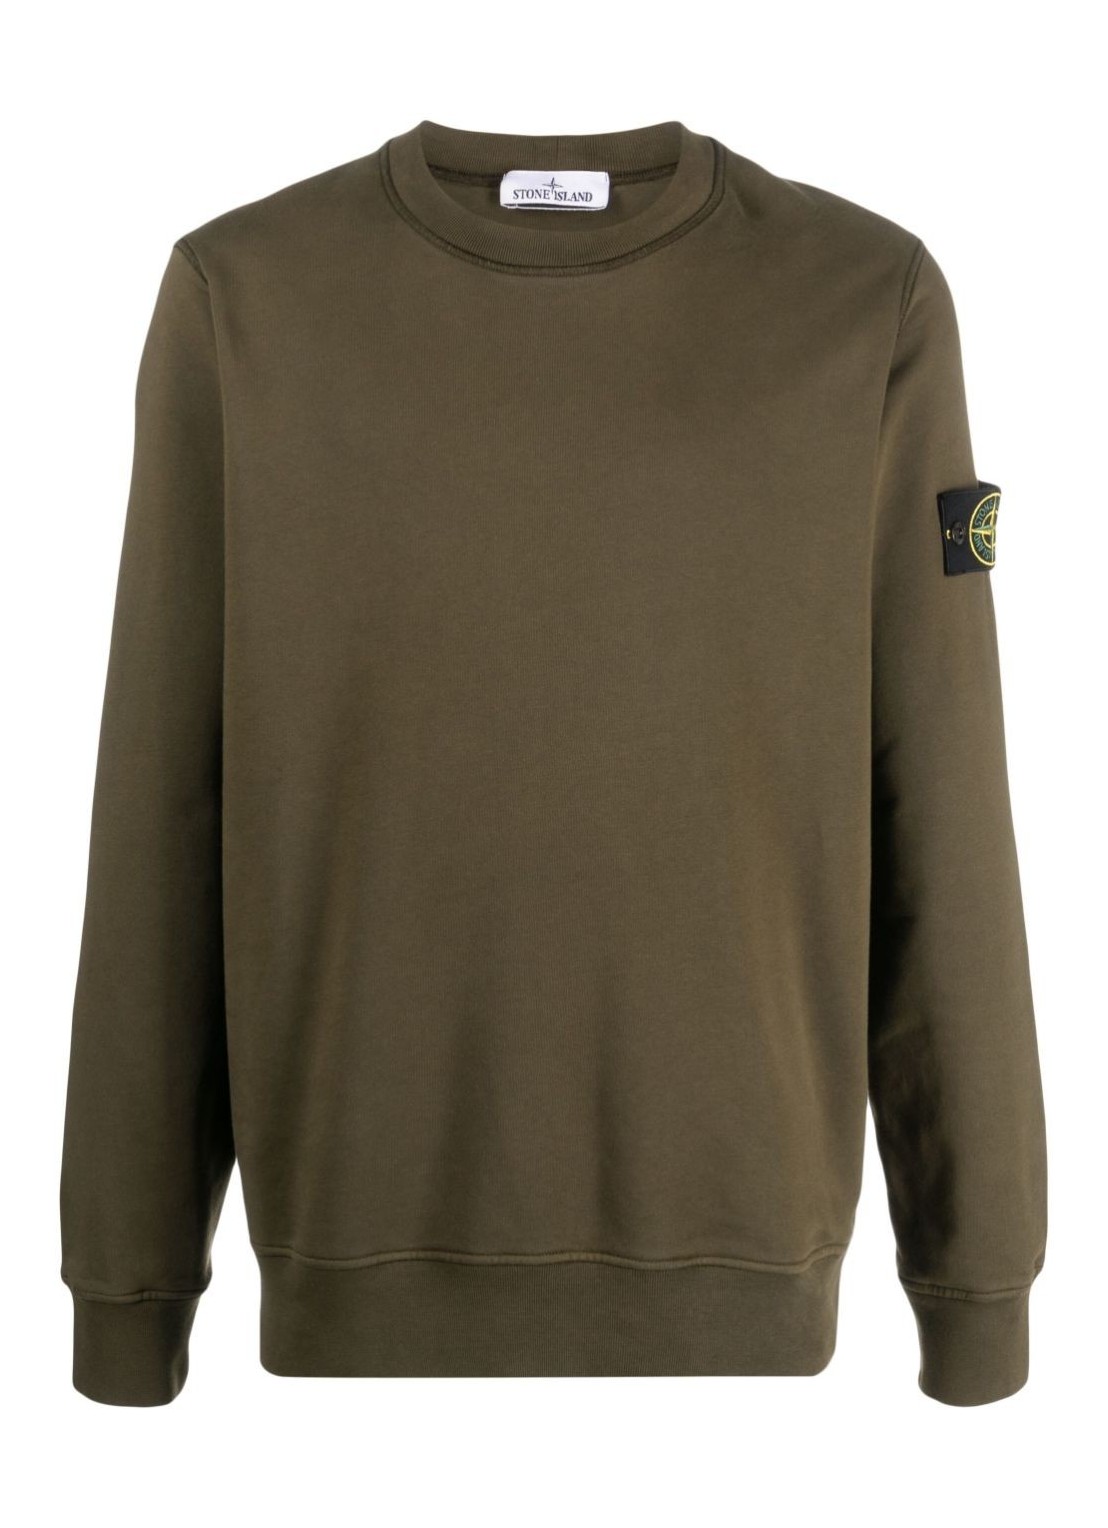 Sudadera stone island sweater man sweat-shirt 791563051 v0058 talla L
 